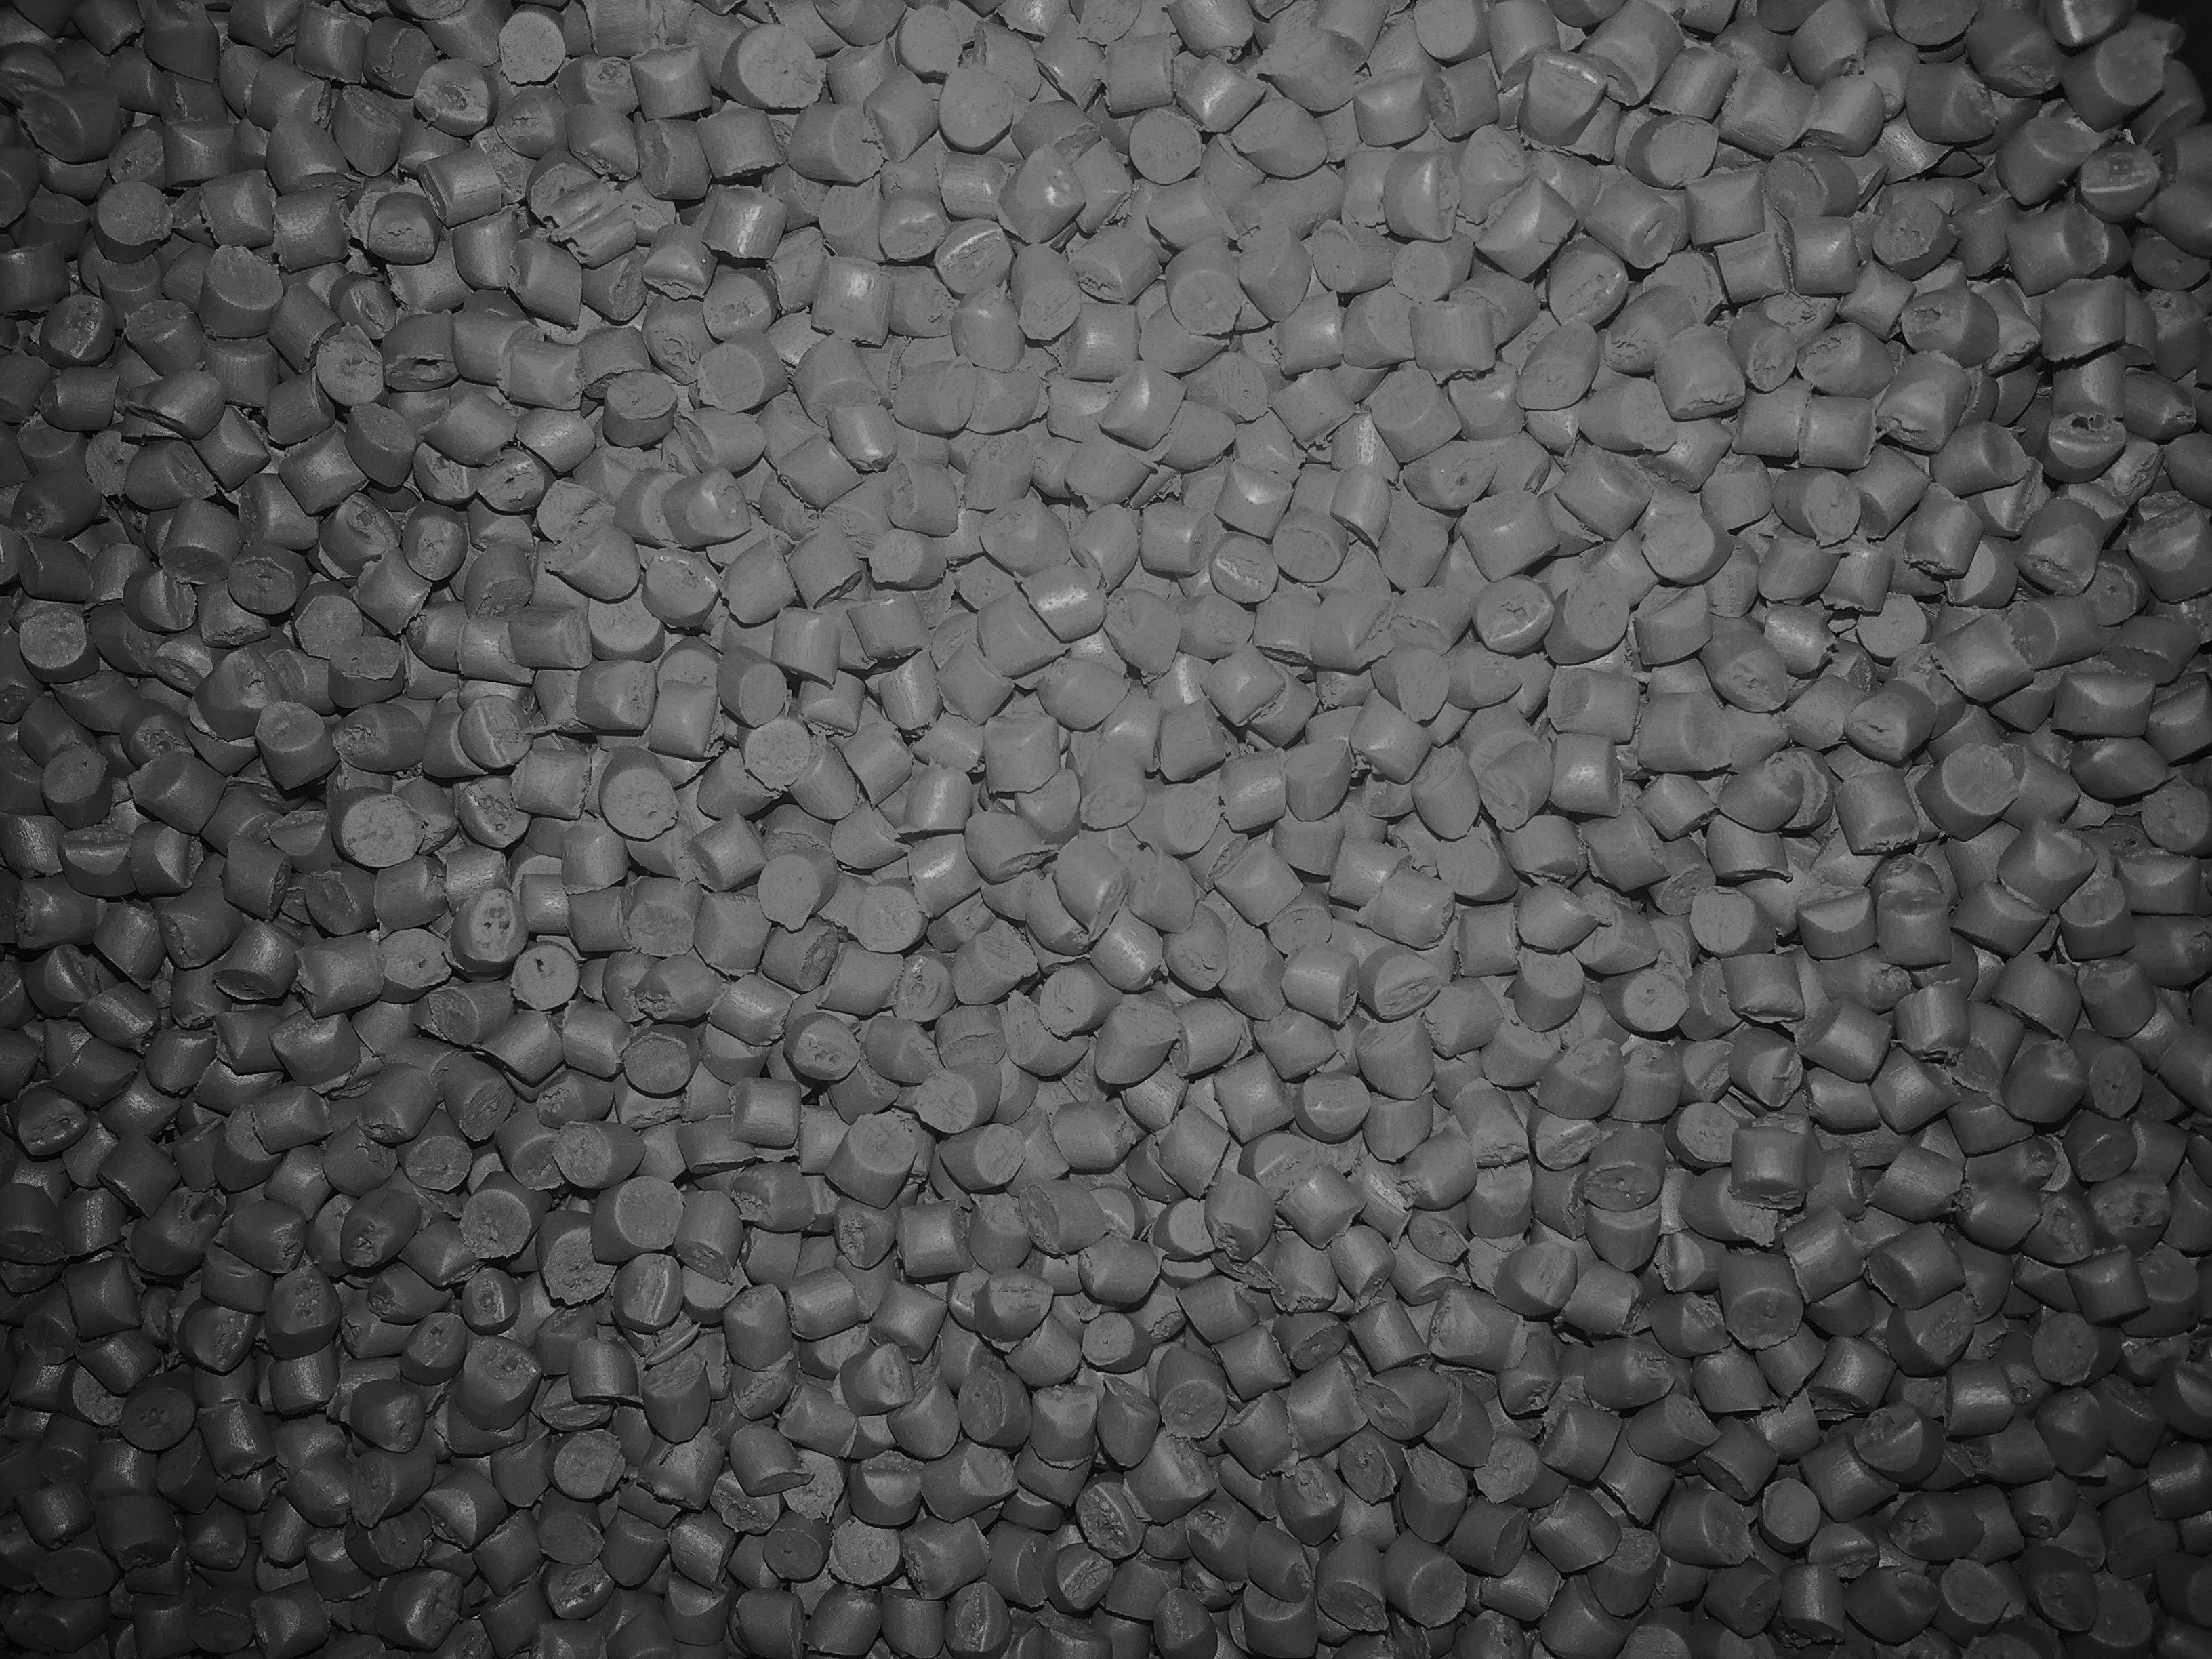 polymer pellets